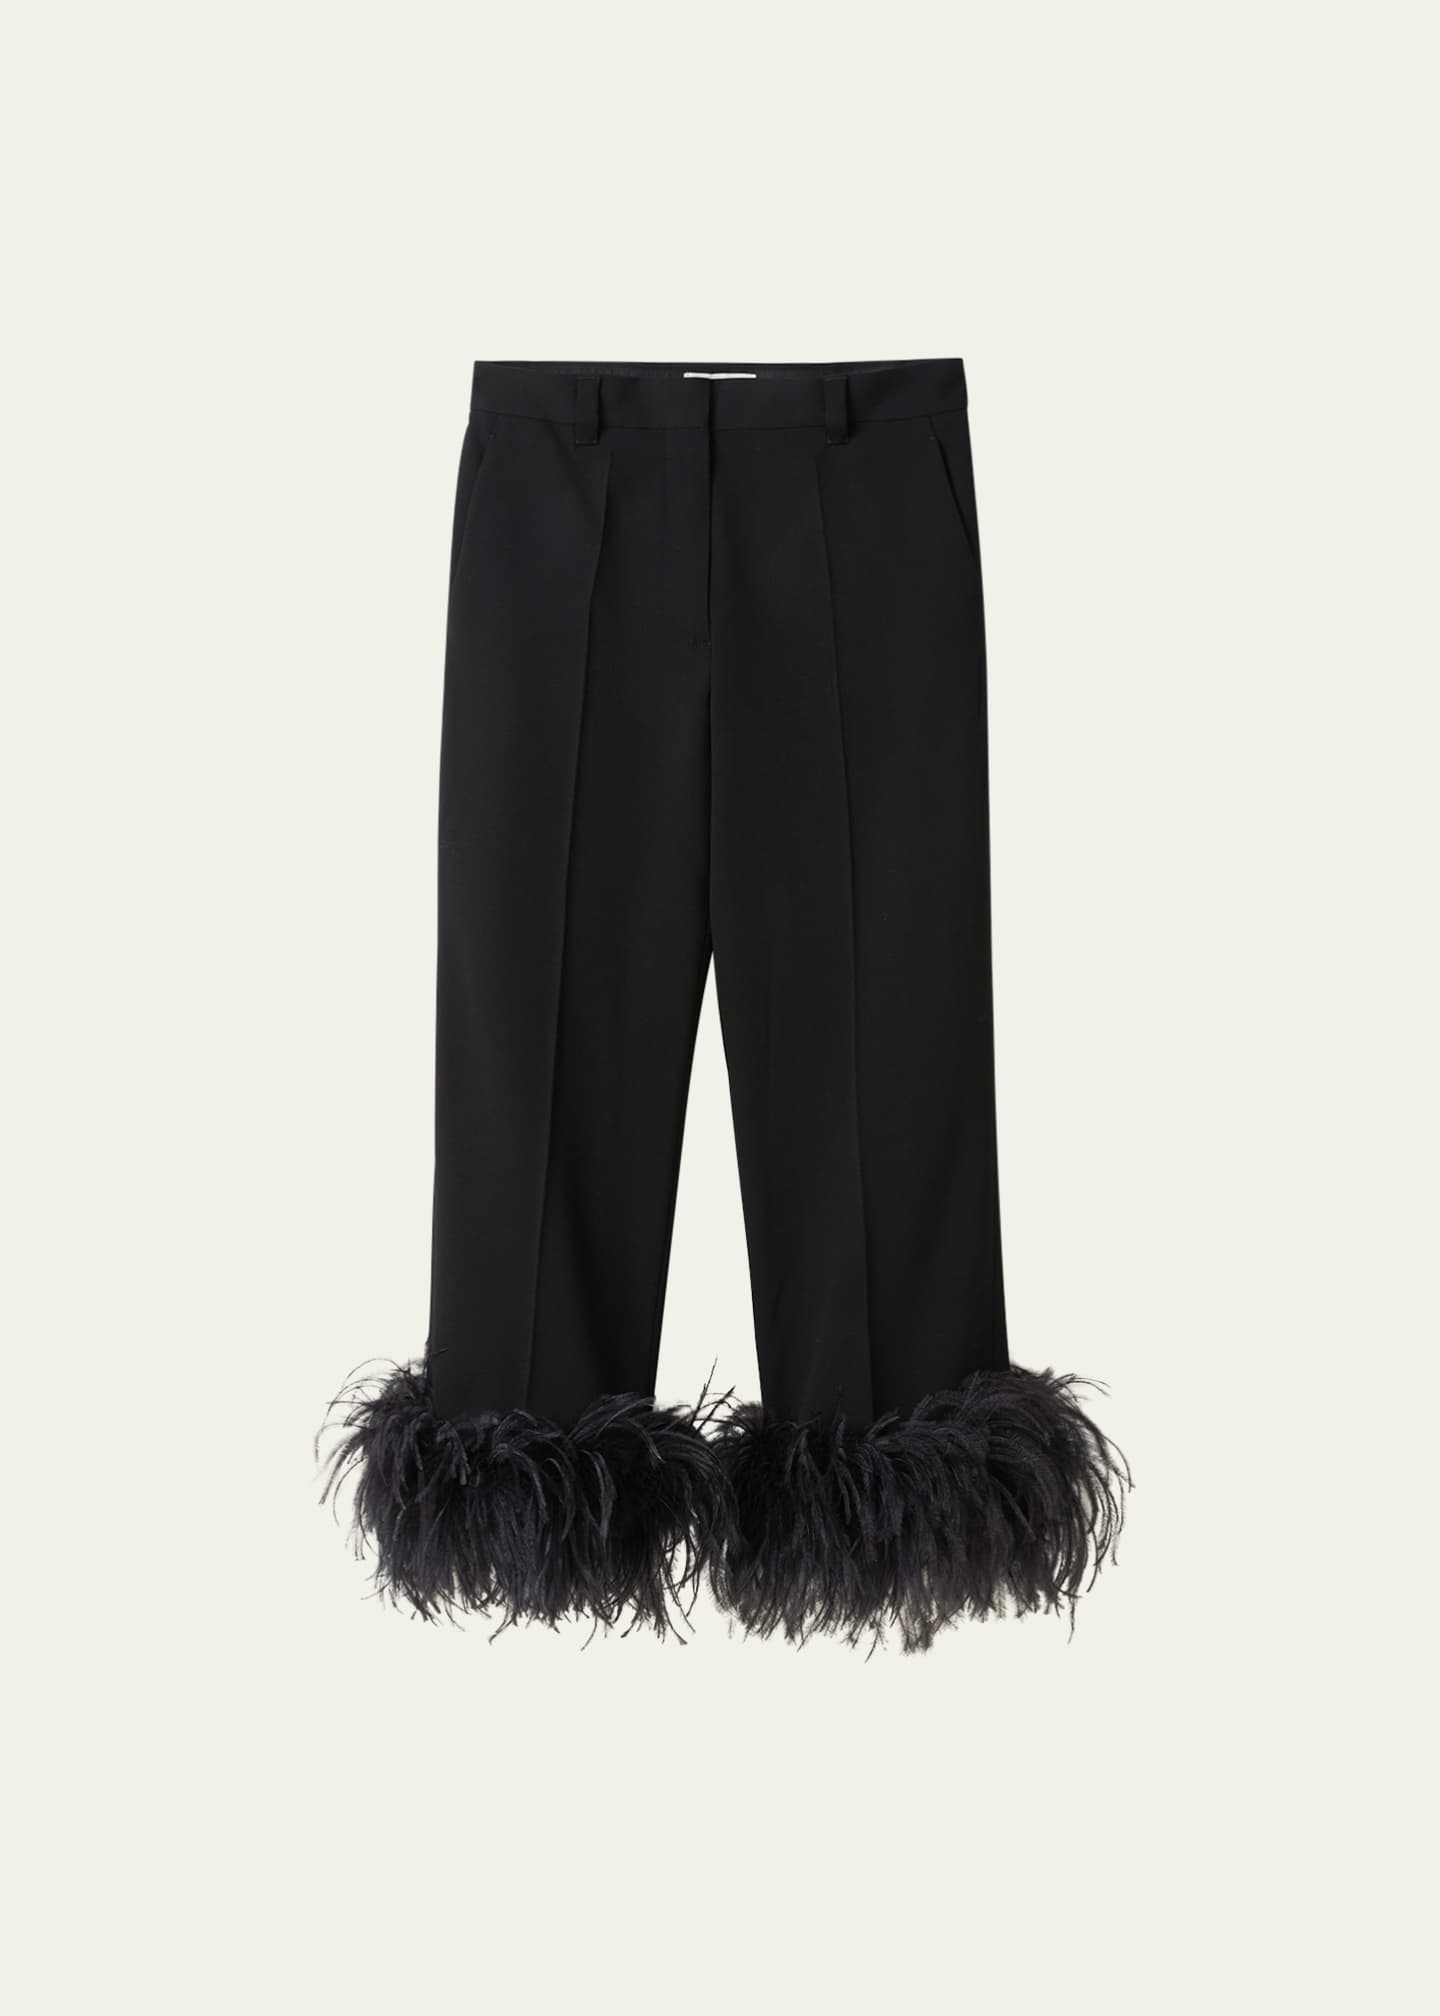 MIU MIU Size US 2 / IT 38 Black Cotton Blend Narrow Leg Dress Pants